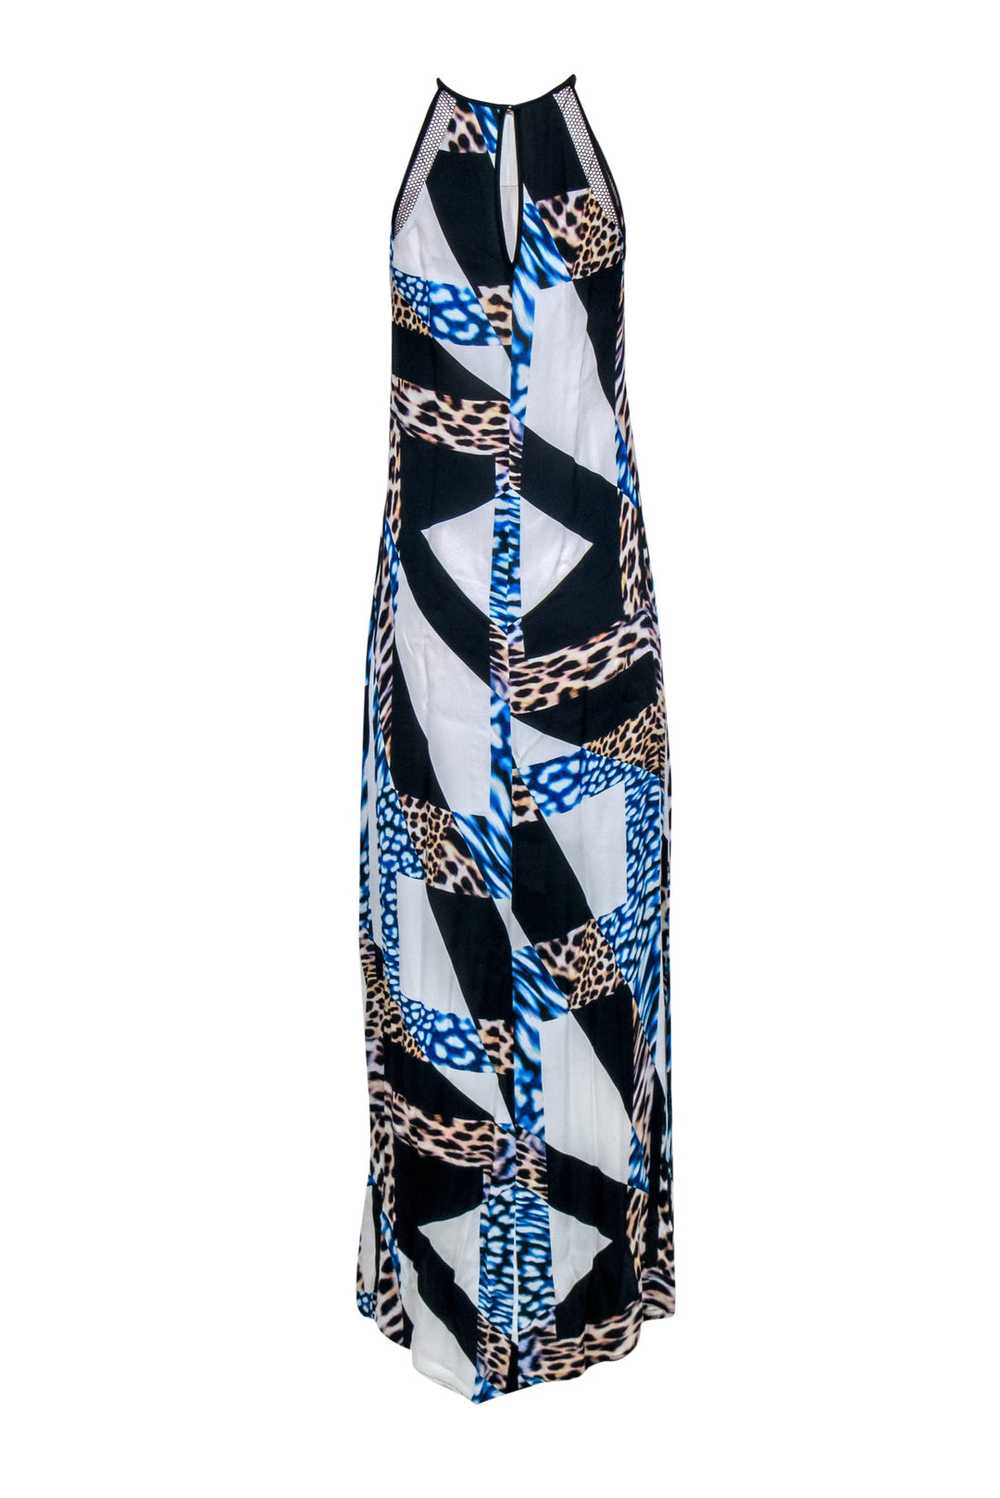 Trina Turk - Blue, Black & White Cheetah Geo Prin… - image 3